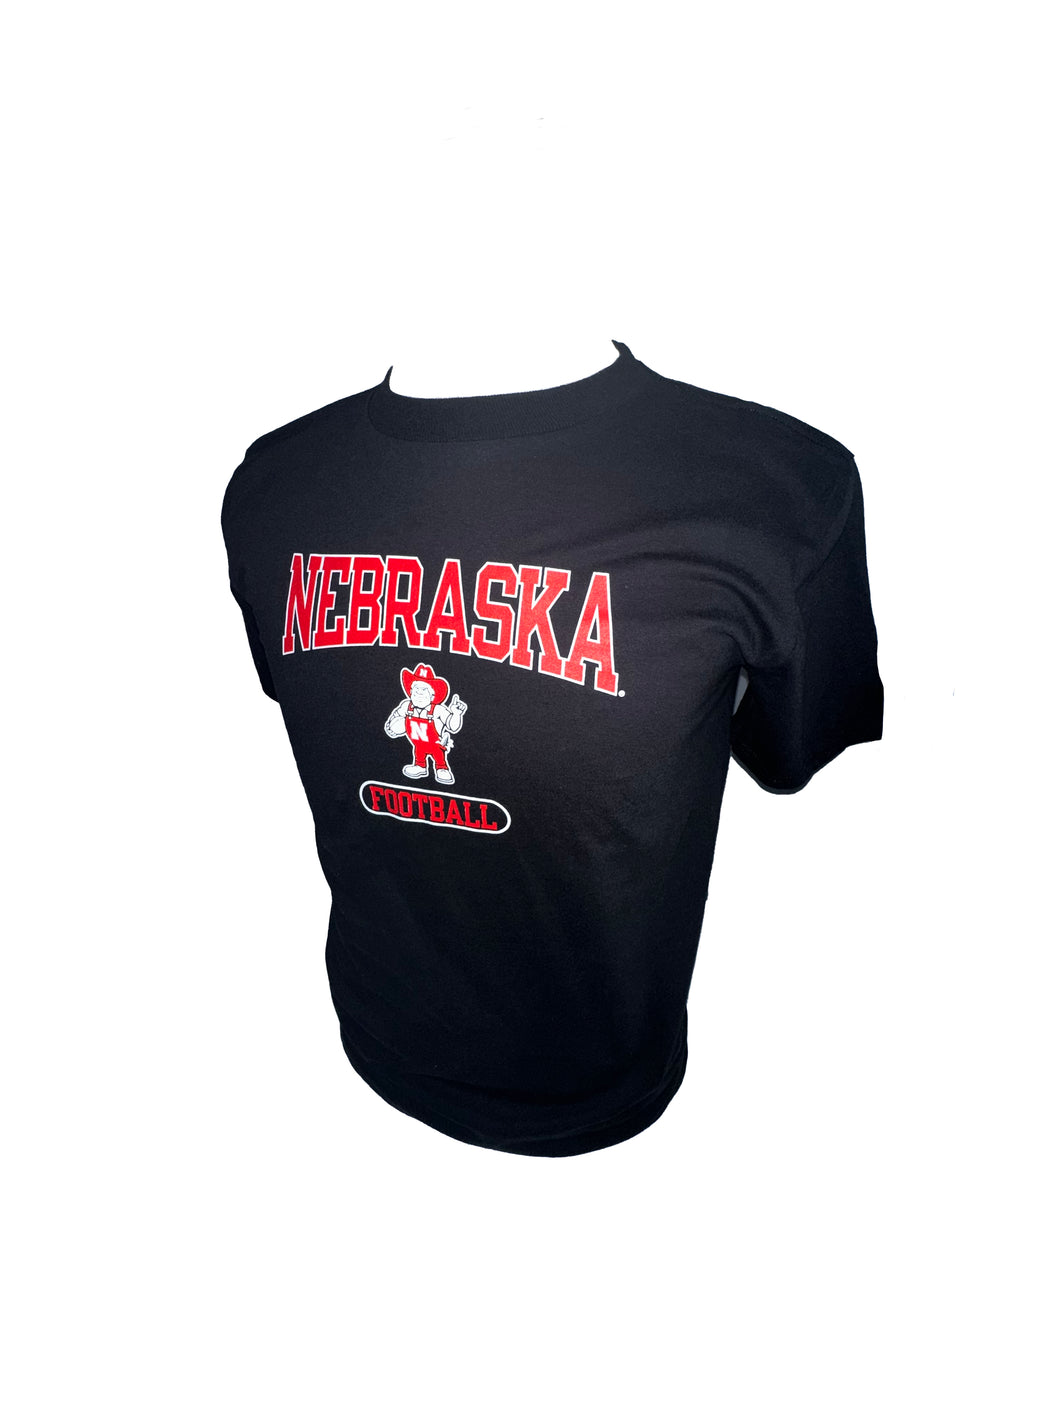 Nebraska Youth Herbie Football T-shirt - Black